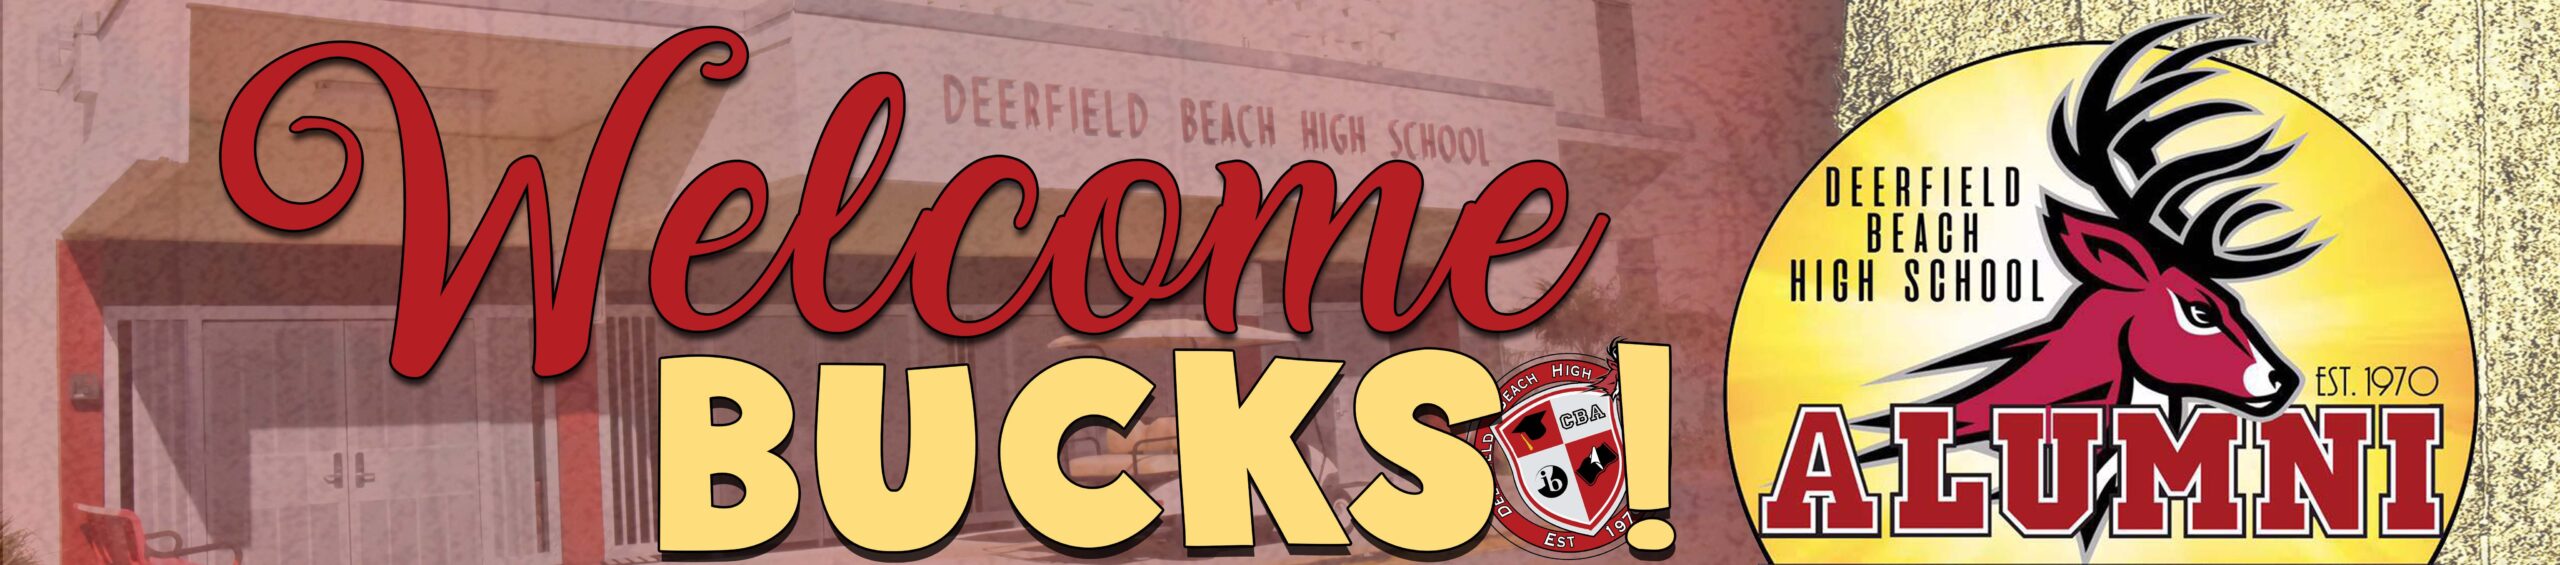 One City, Two Titles  Deerfield Beach High School